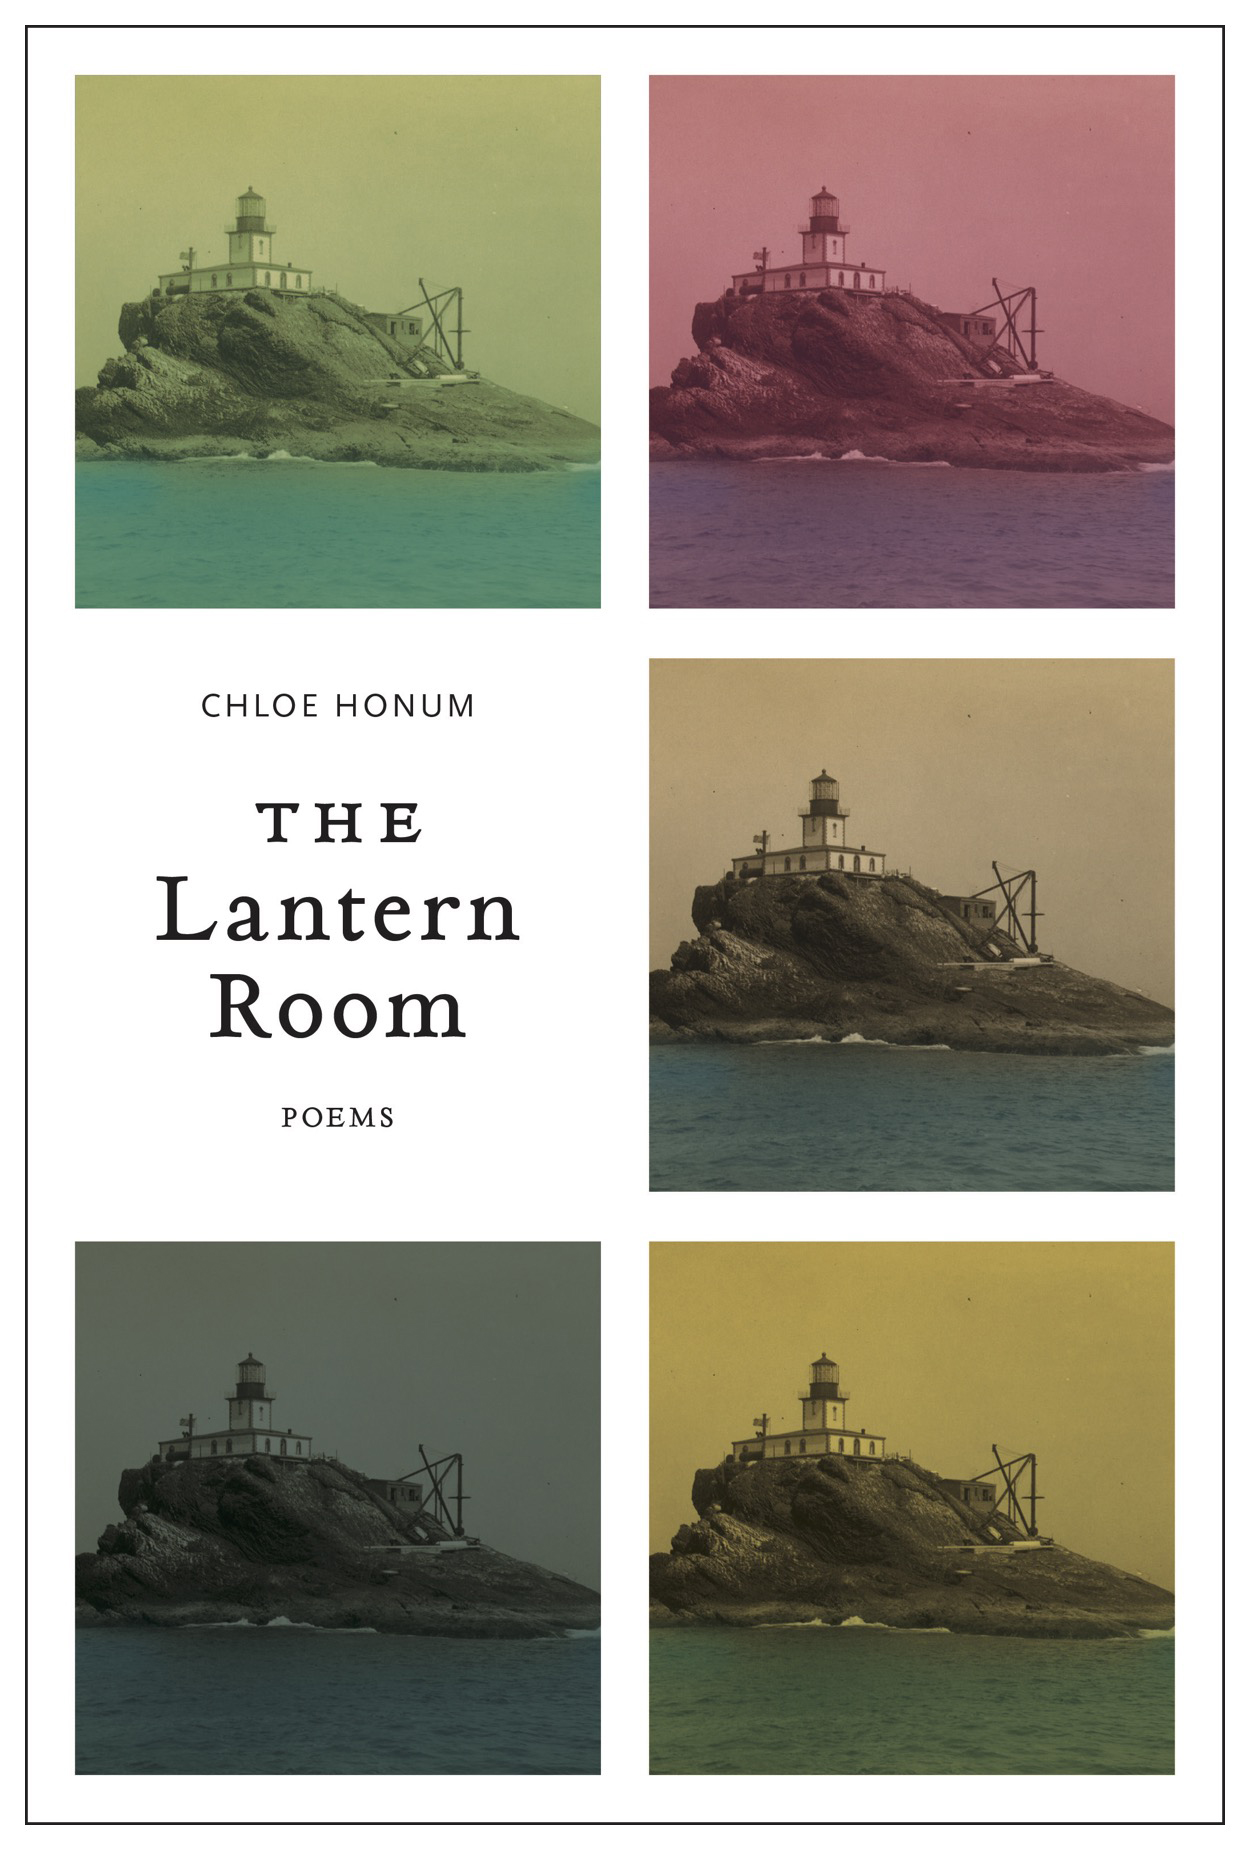 A Memorandum of My Several Senses: Chloe Honum’s The Lantern Room